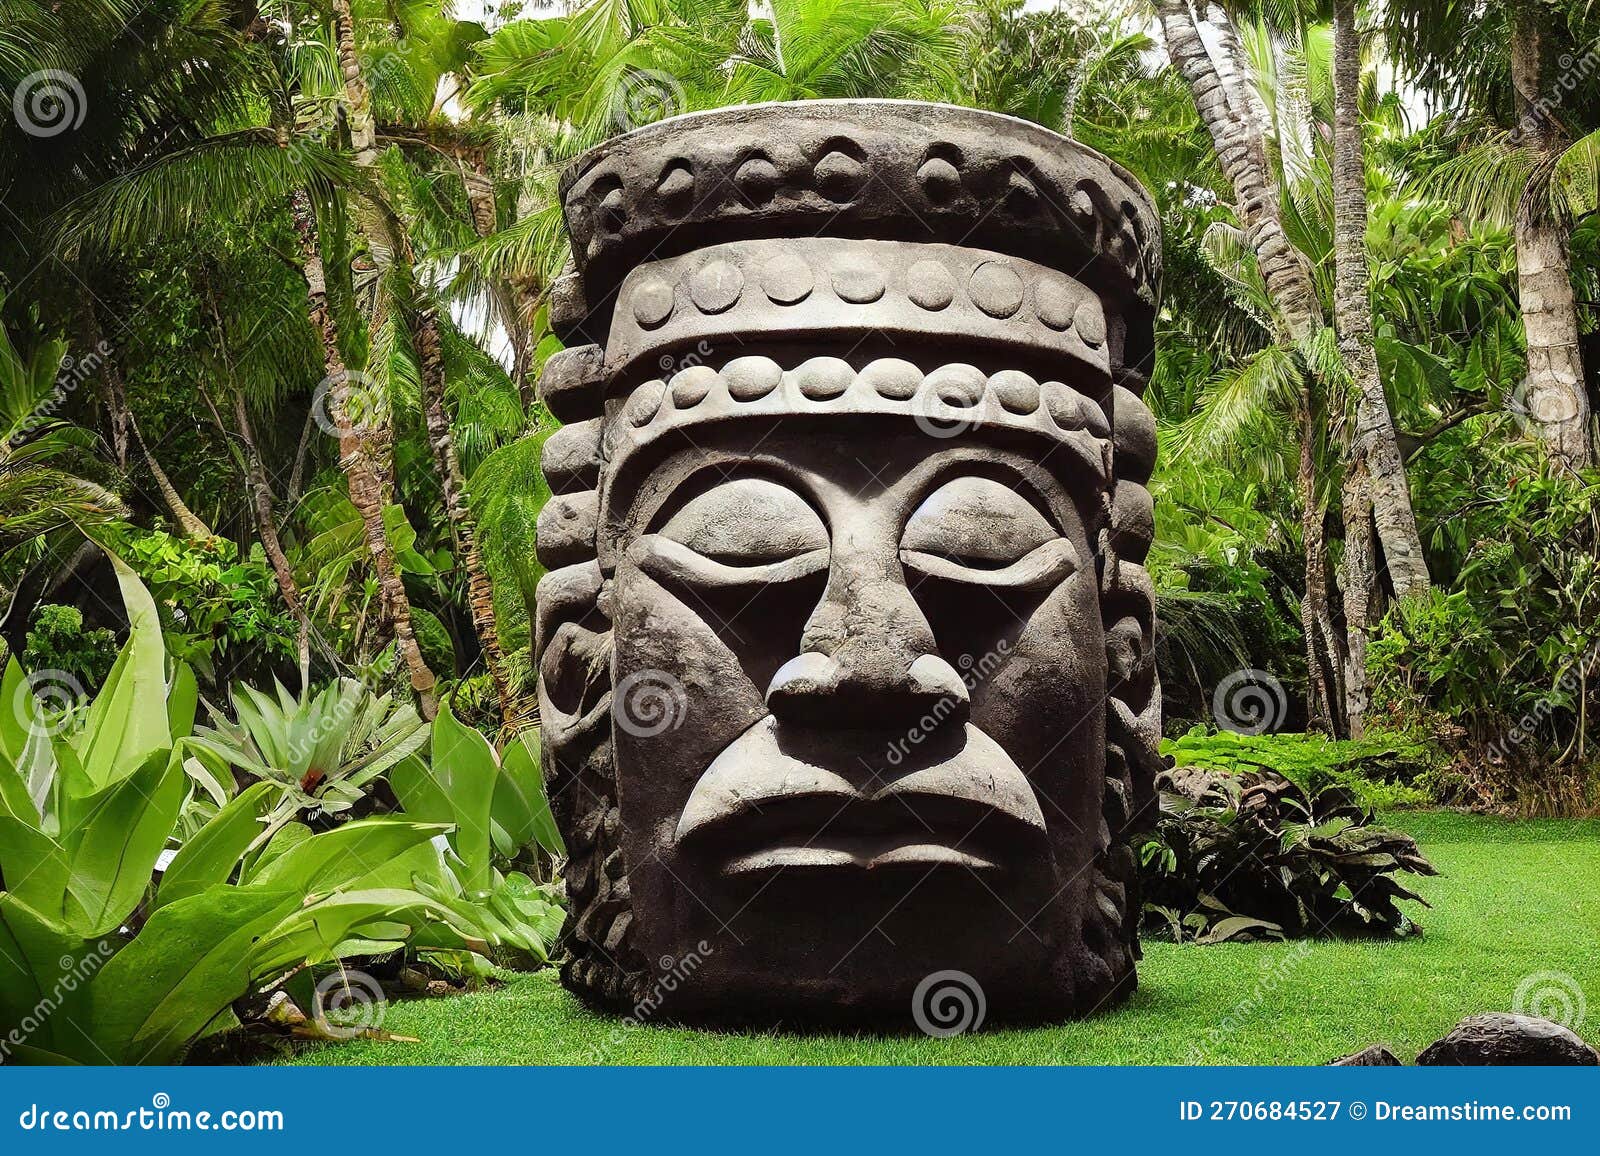 Large Sleeping Idol Head Tiki Mask Made Of Stone In Tropical Jungle 